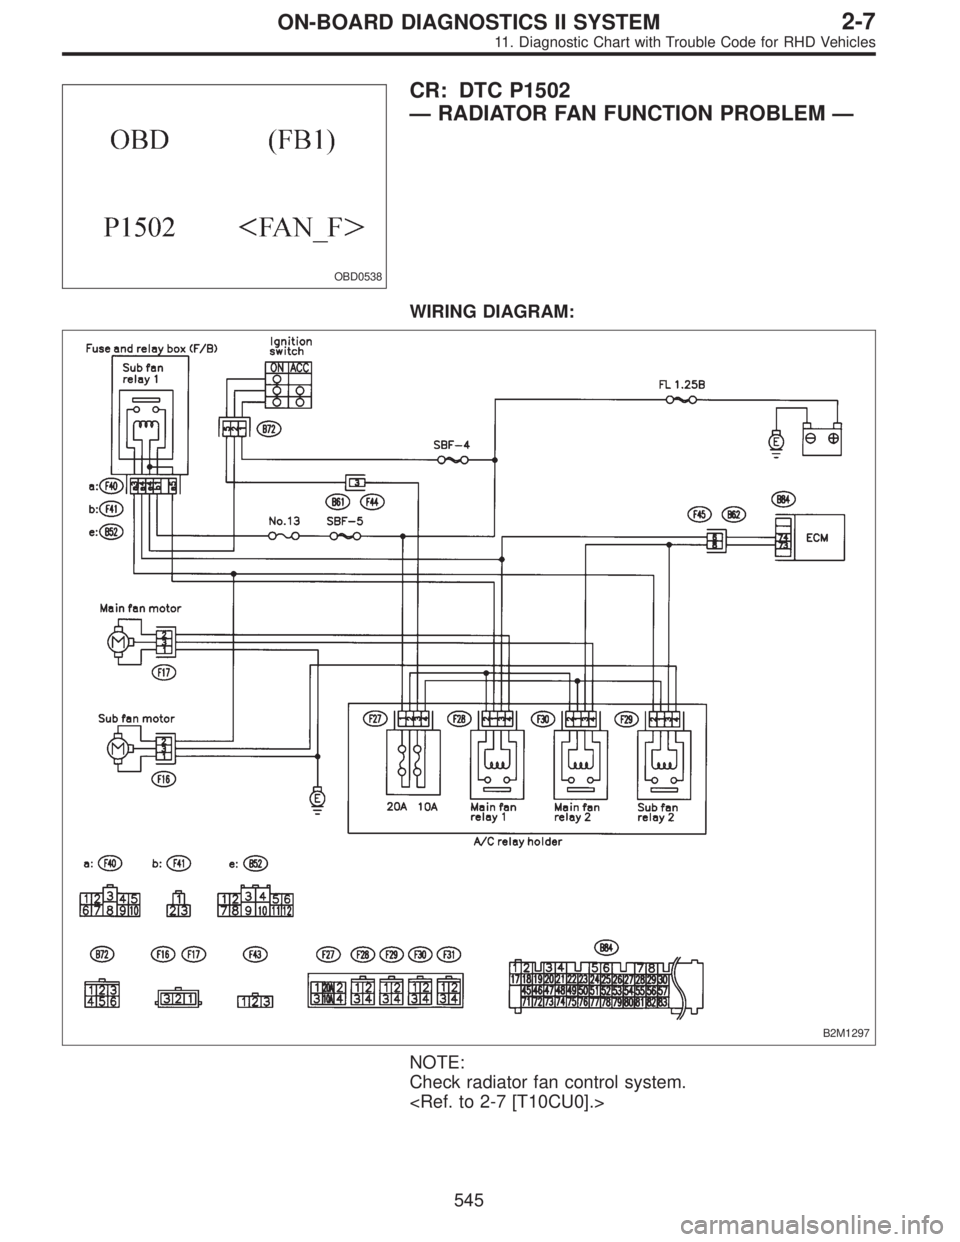 SUBARU LEGACY 1997  Service Manual PDF OBD0538
CR: DTC P1502
—RADIATOR FAN FUNCTION PROBLEM—
WIRING DIAGRAM:
B2M1297
NOTE:
Check radiator fan control system.
<Ref. to 2-7 [T10CU0].>
545
2-7ON-BOARD DIAGNOSTICS II SYSTEM
11. Diagnostic 